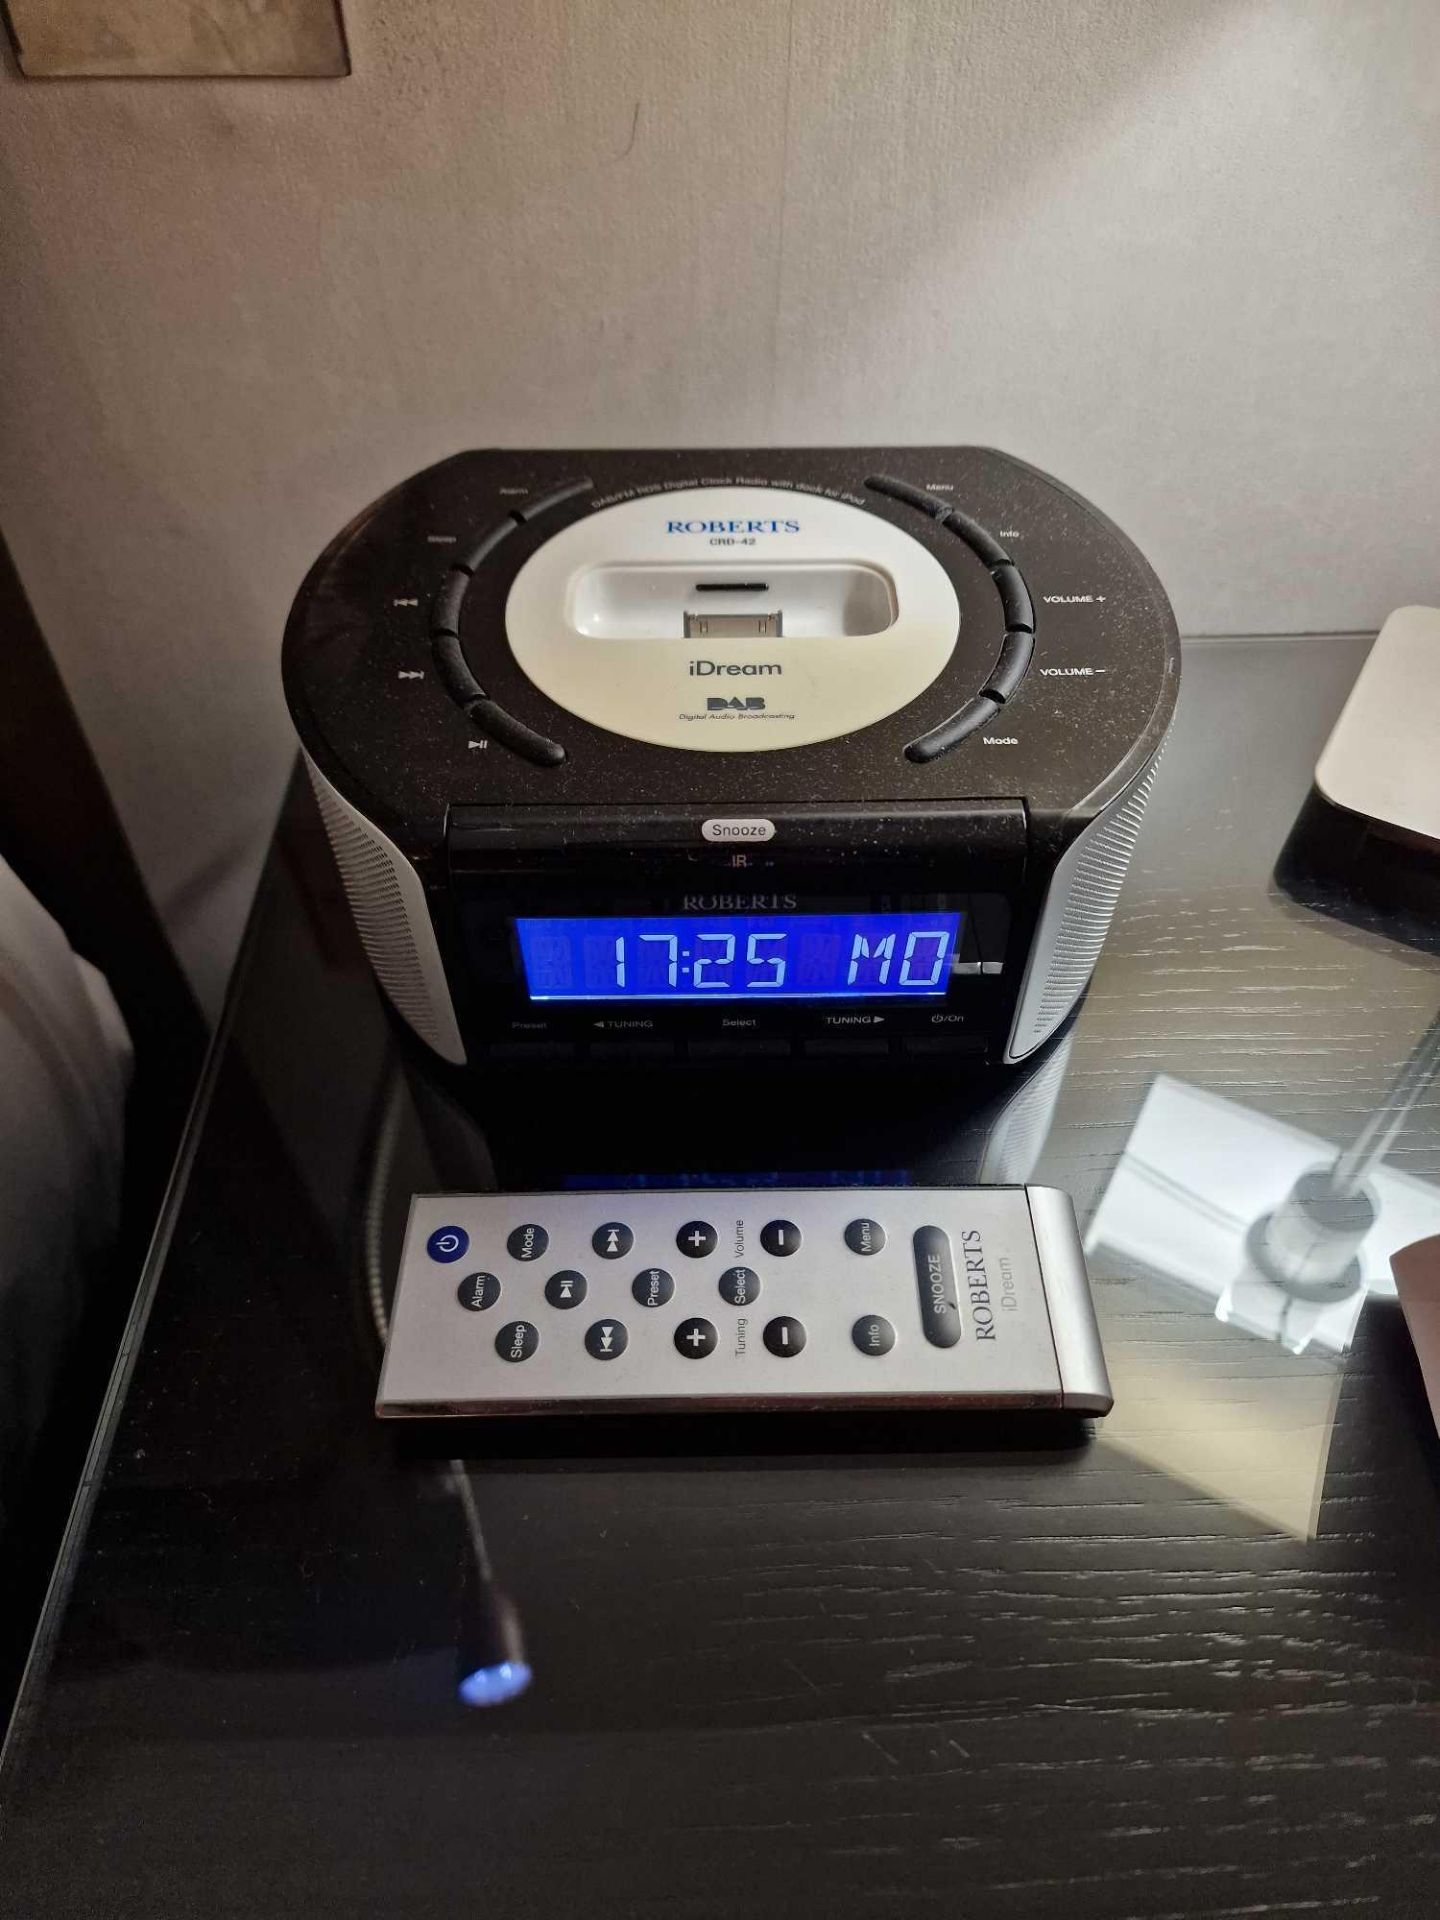 Roberts I Dream CRD-42 DAB/FM RDS digital stereo clock radio with I Pod dock (Room 2D)